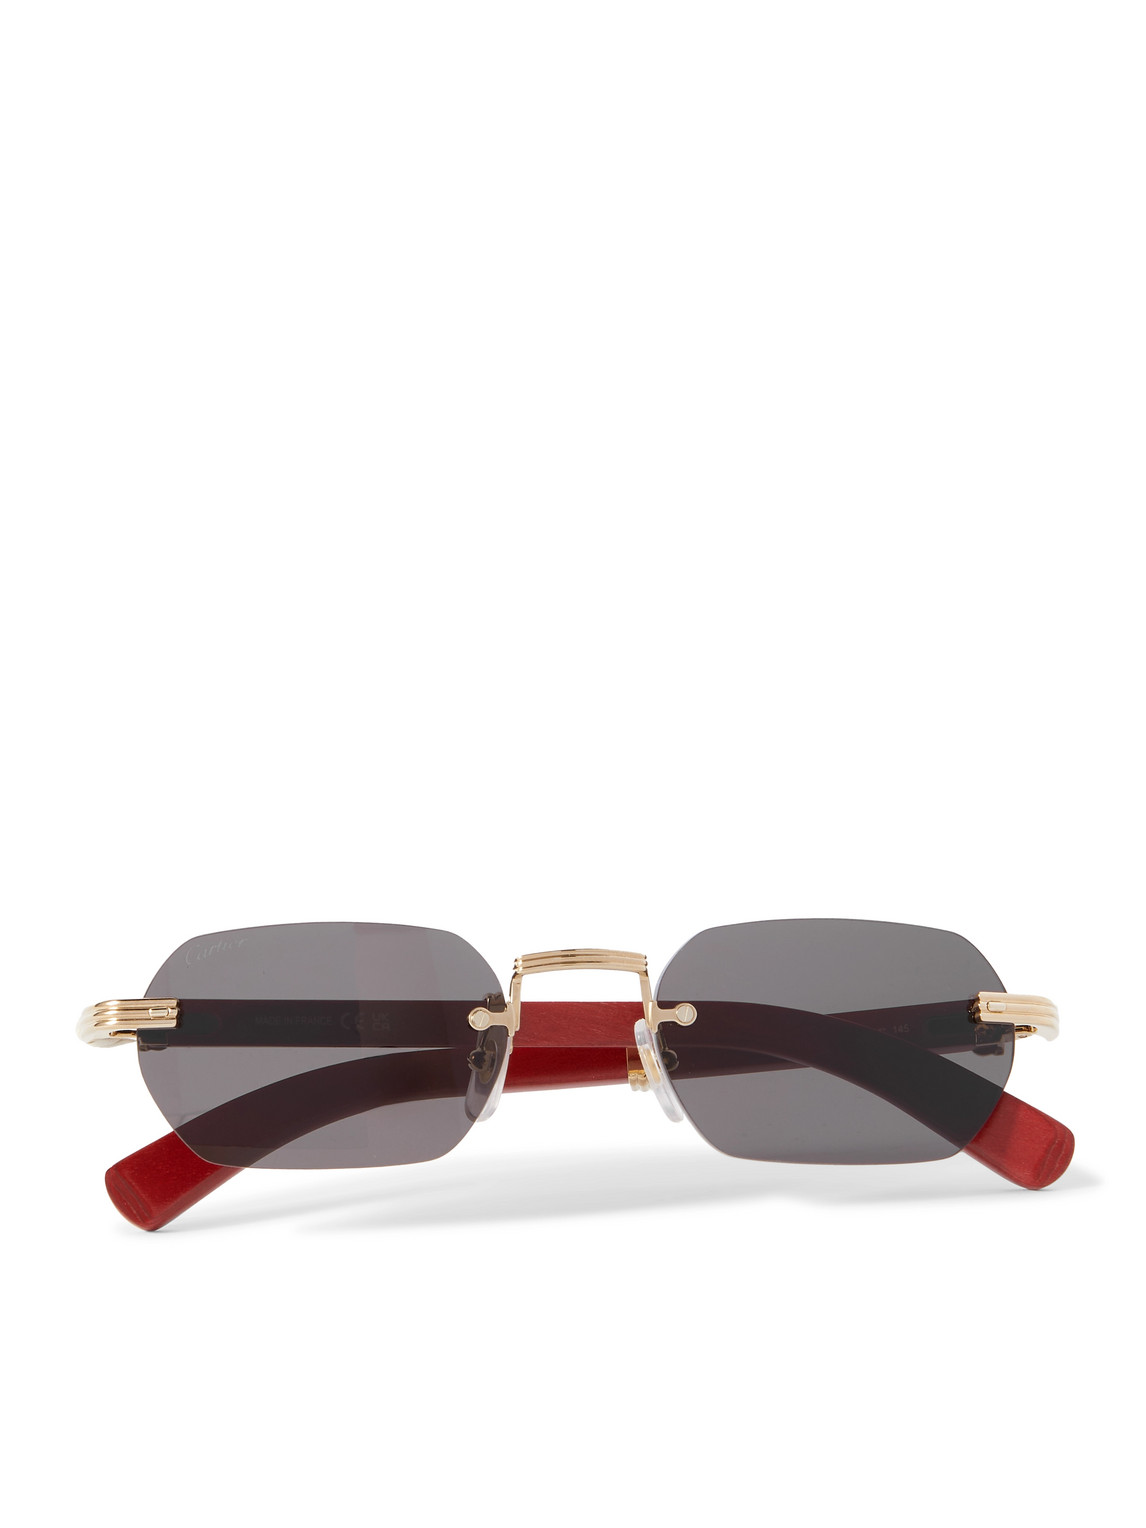 Cartier Eyewear - Rectangular-Frame Gold-Tone and Wood Sunglasses - Men - Red von Cartier Eyewear